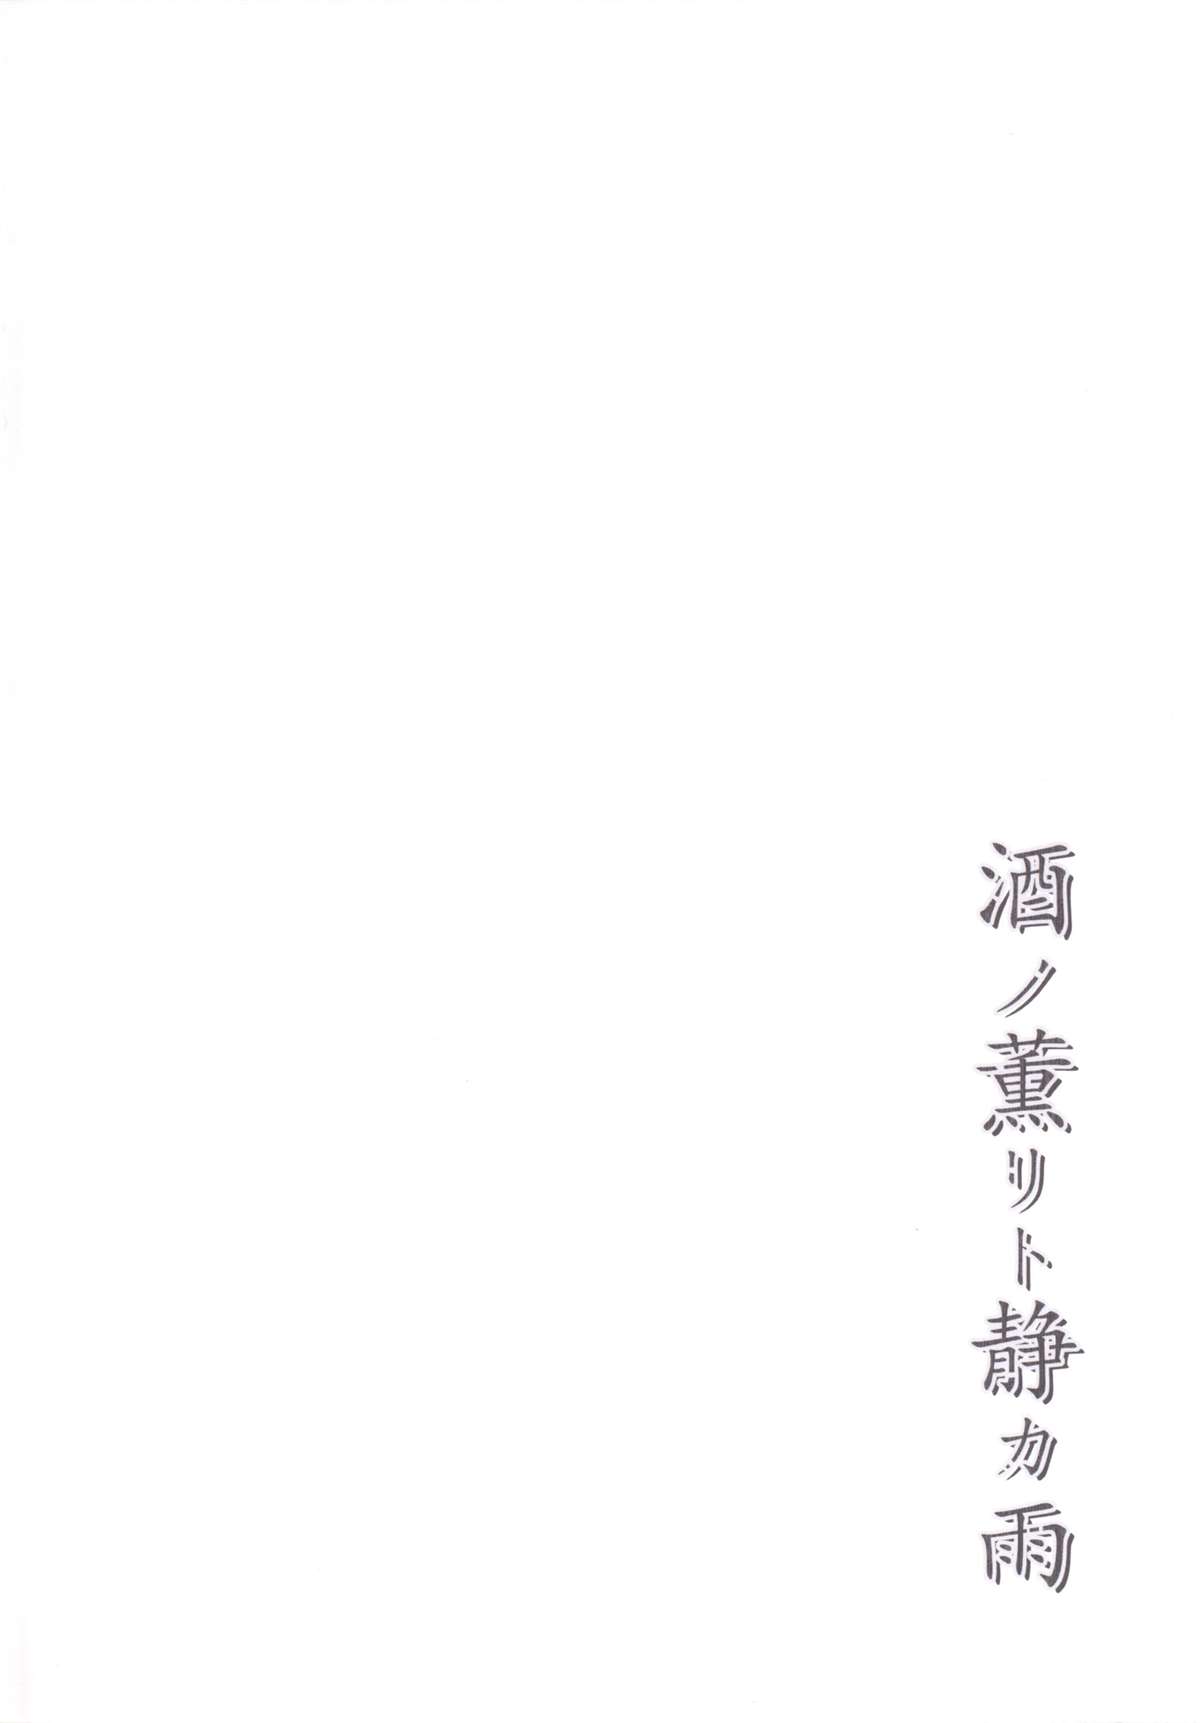 [Crea-Holic (トシヒロ)] 酒ノ薫リト静カ雨 (艦隊これくしょん -艦これ-) [DL版]